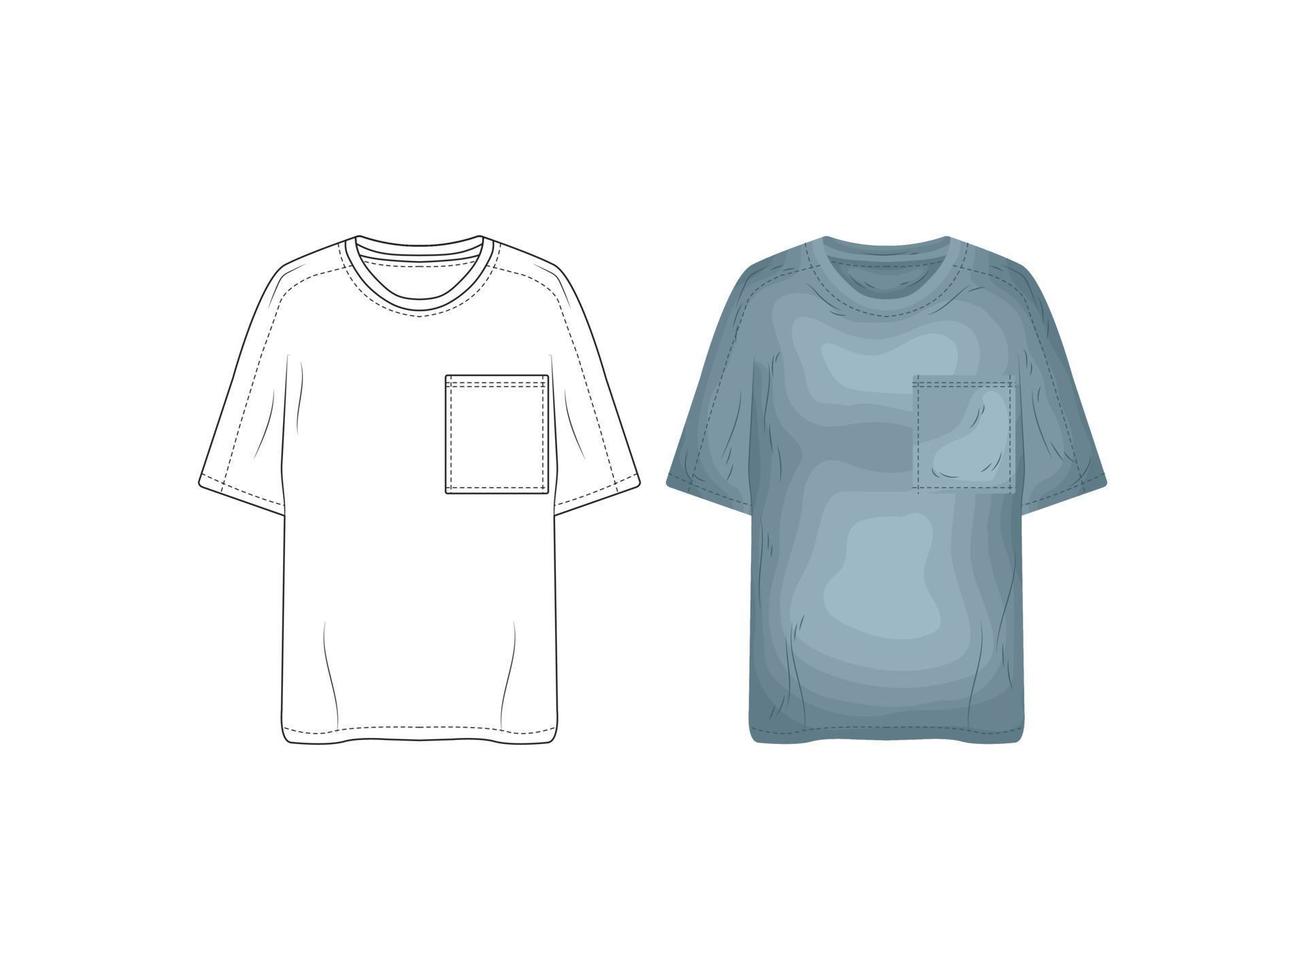 mode product catalogus uniformen mockup schets vector illustratie kleding silhouet